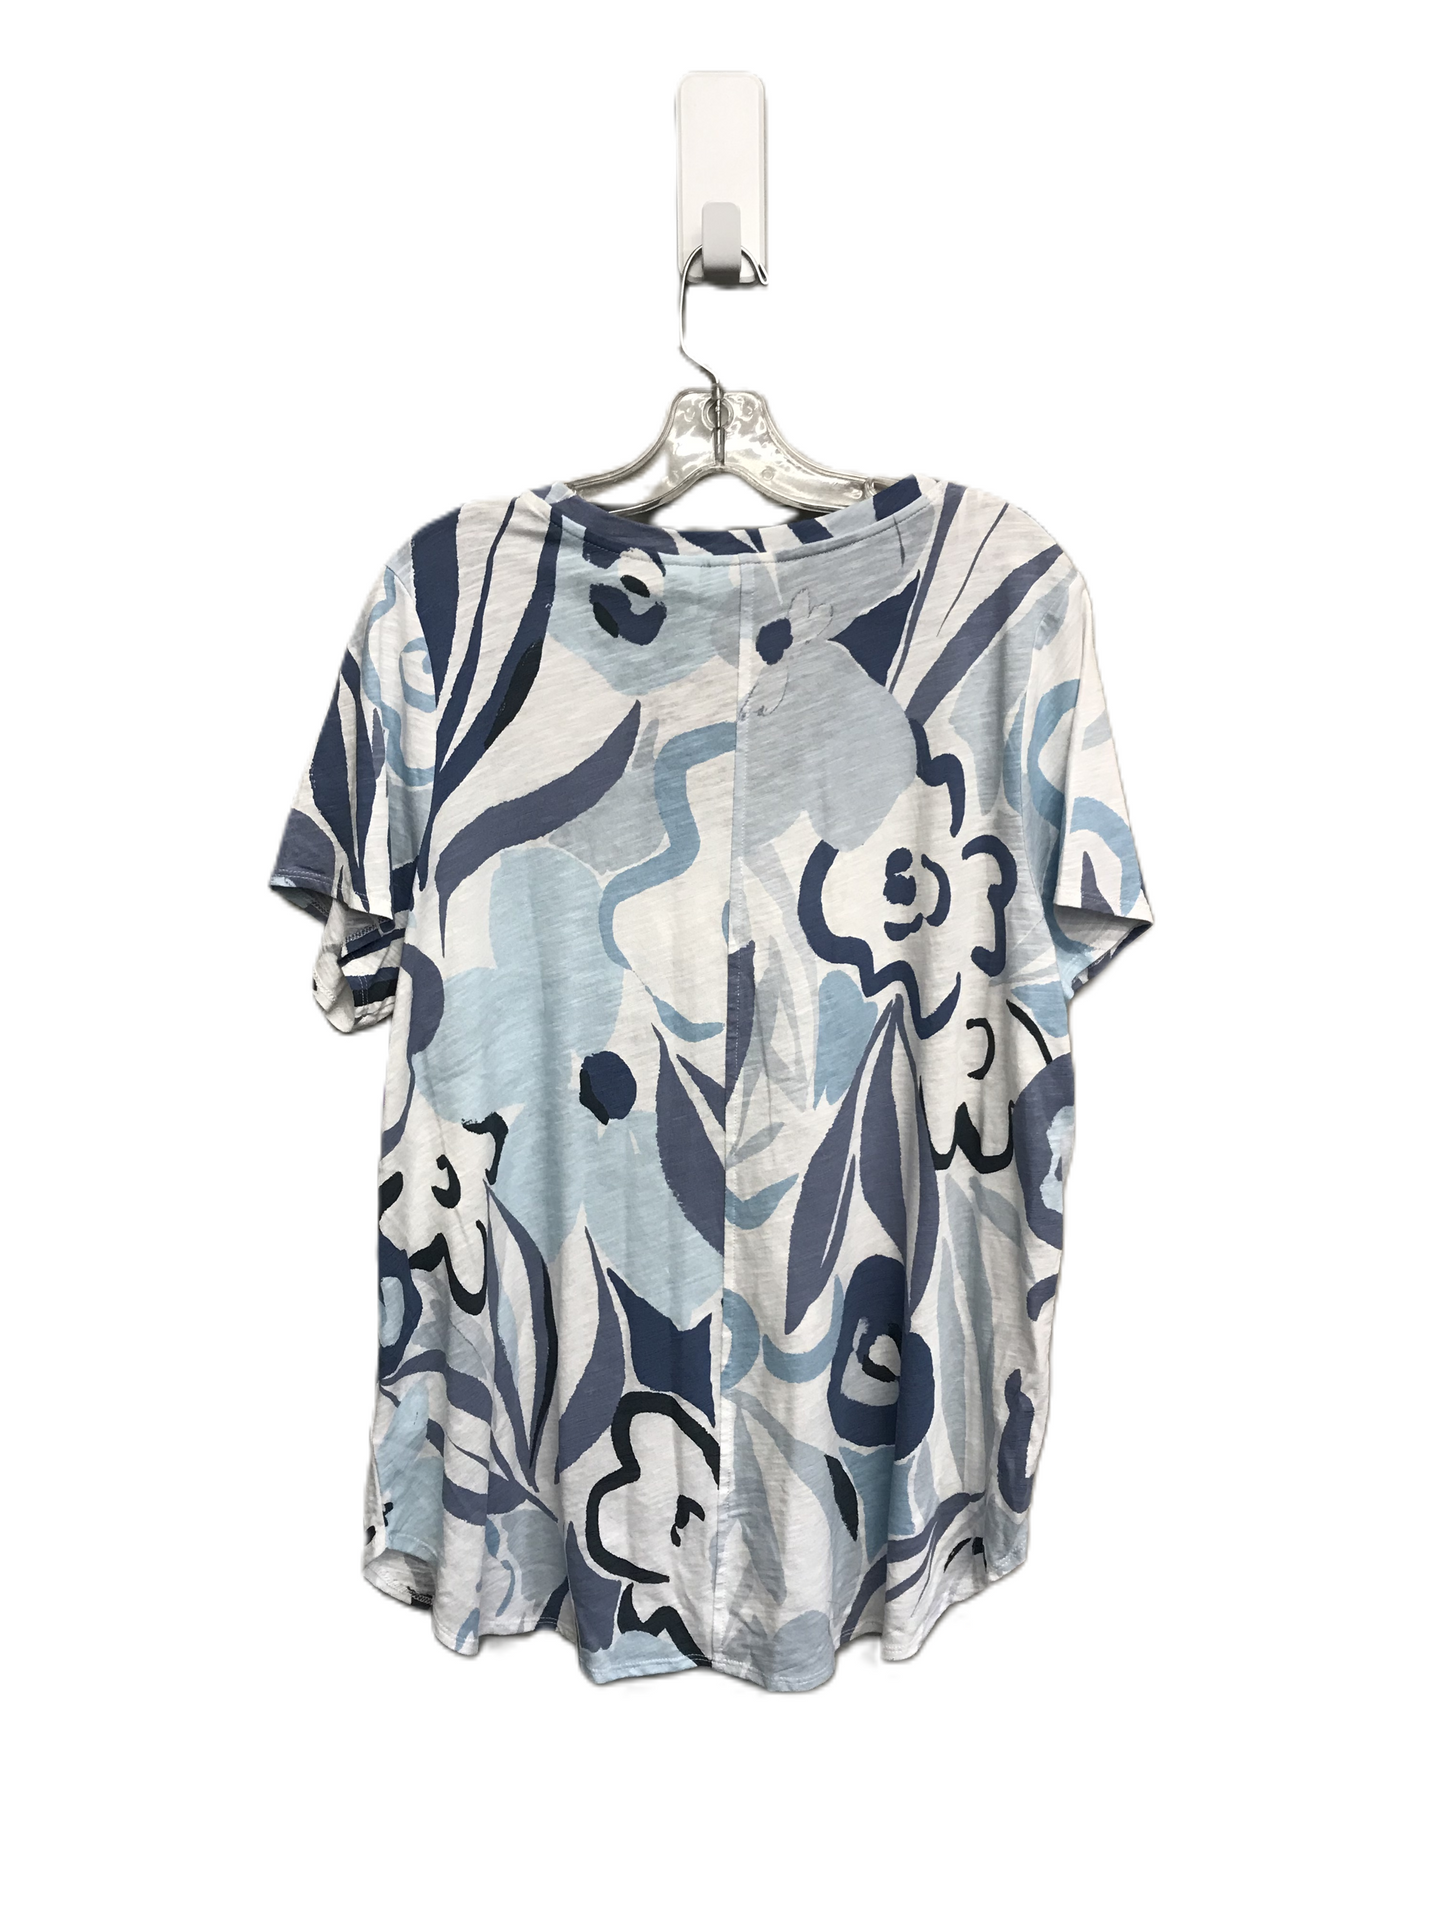 Blue & White Top Short Sleeve By Rachel Zoe, Size: 1x